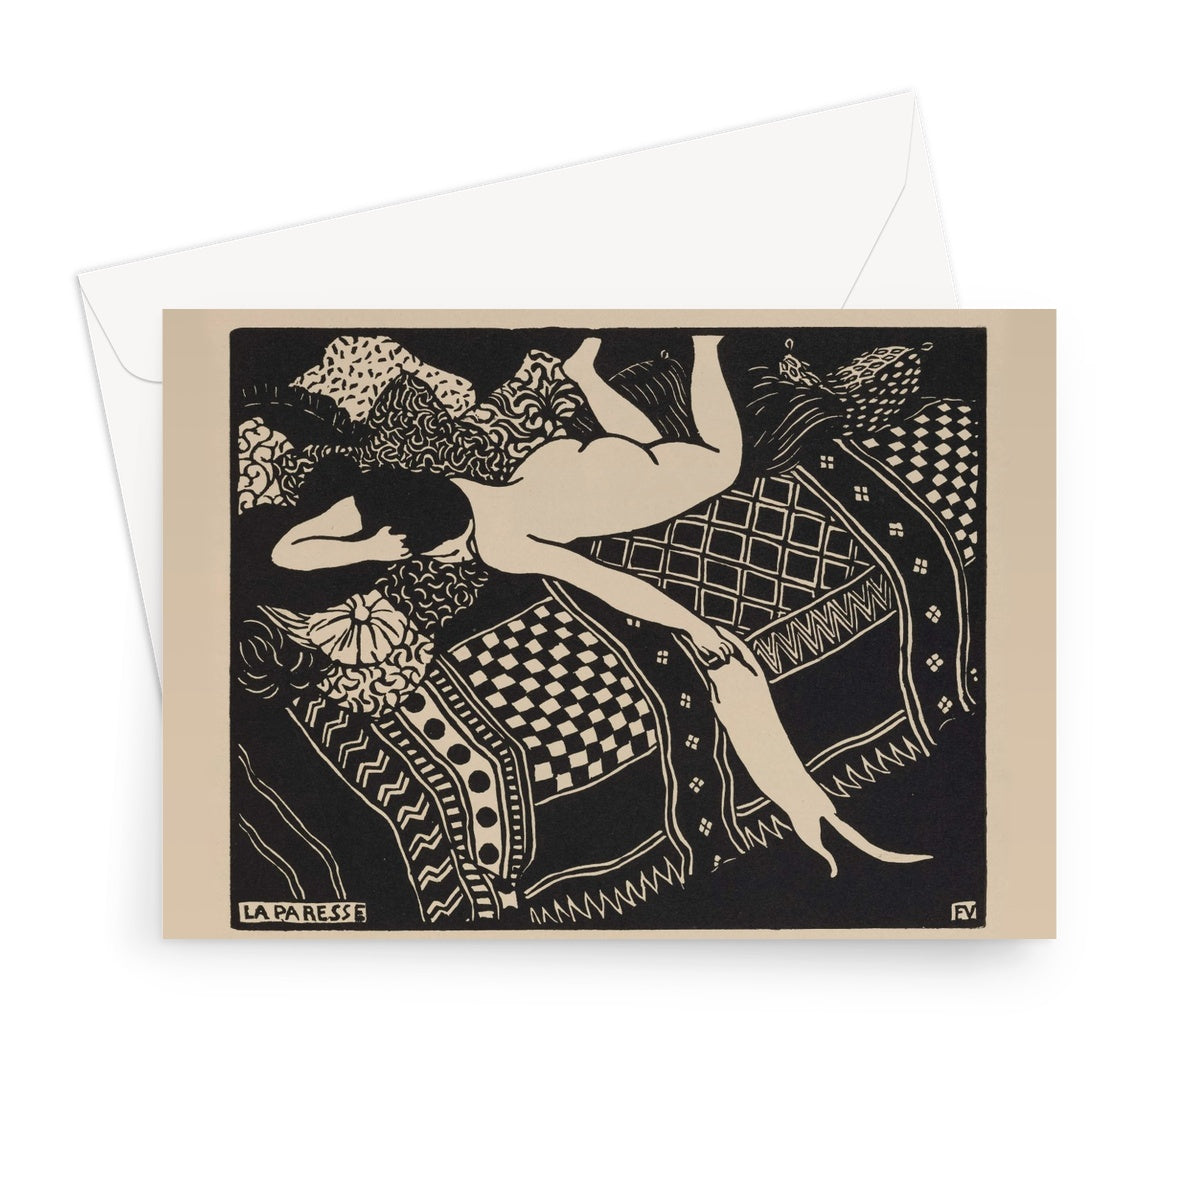 Laziness by Félix Vallotton, 1896 - Greeting Card